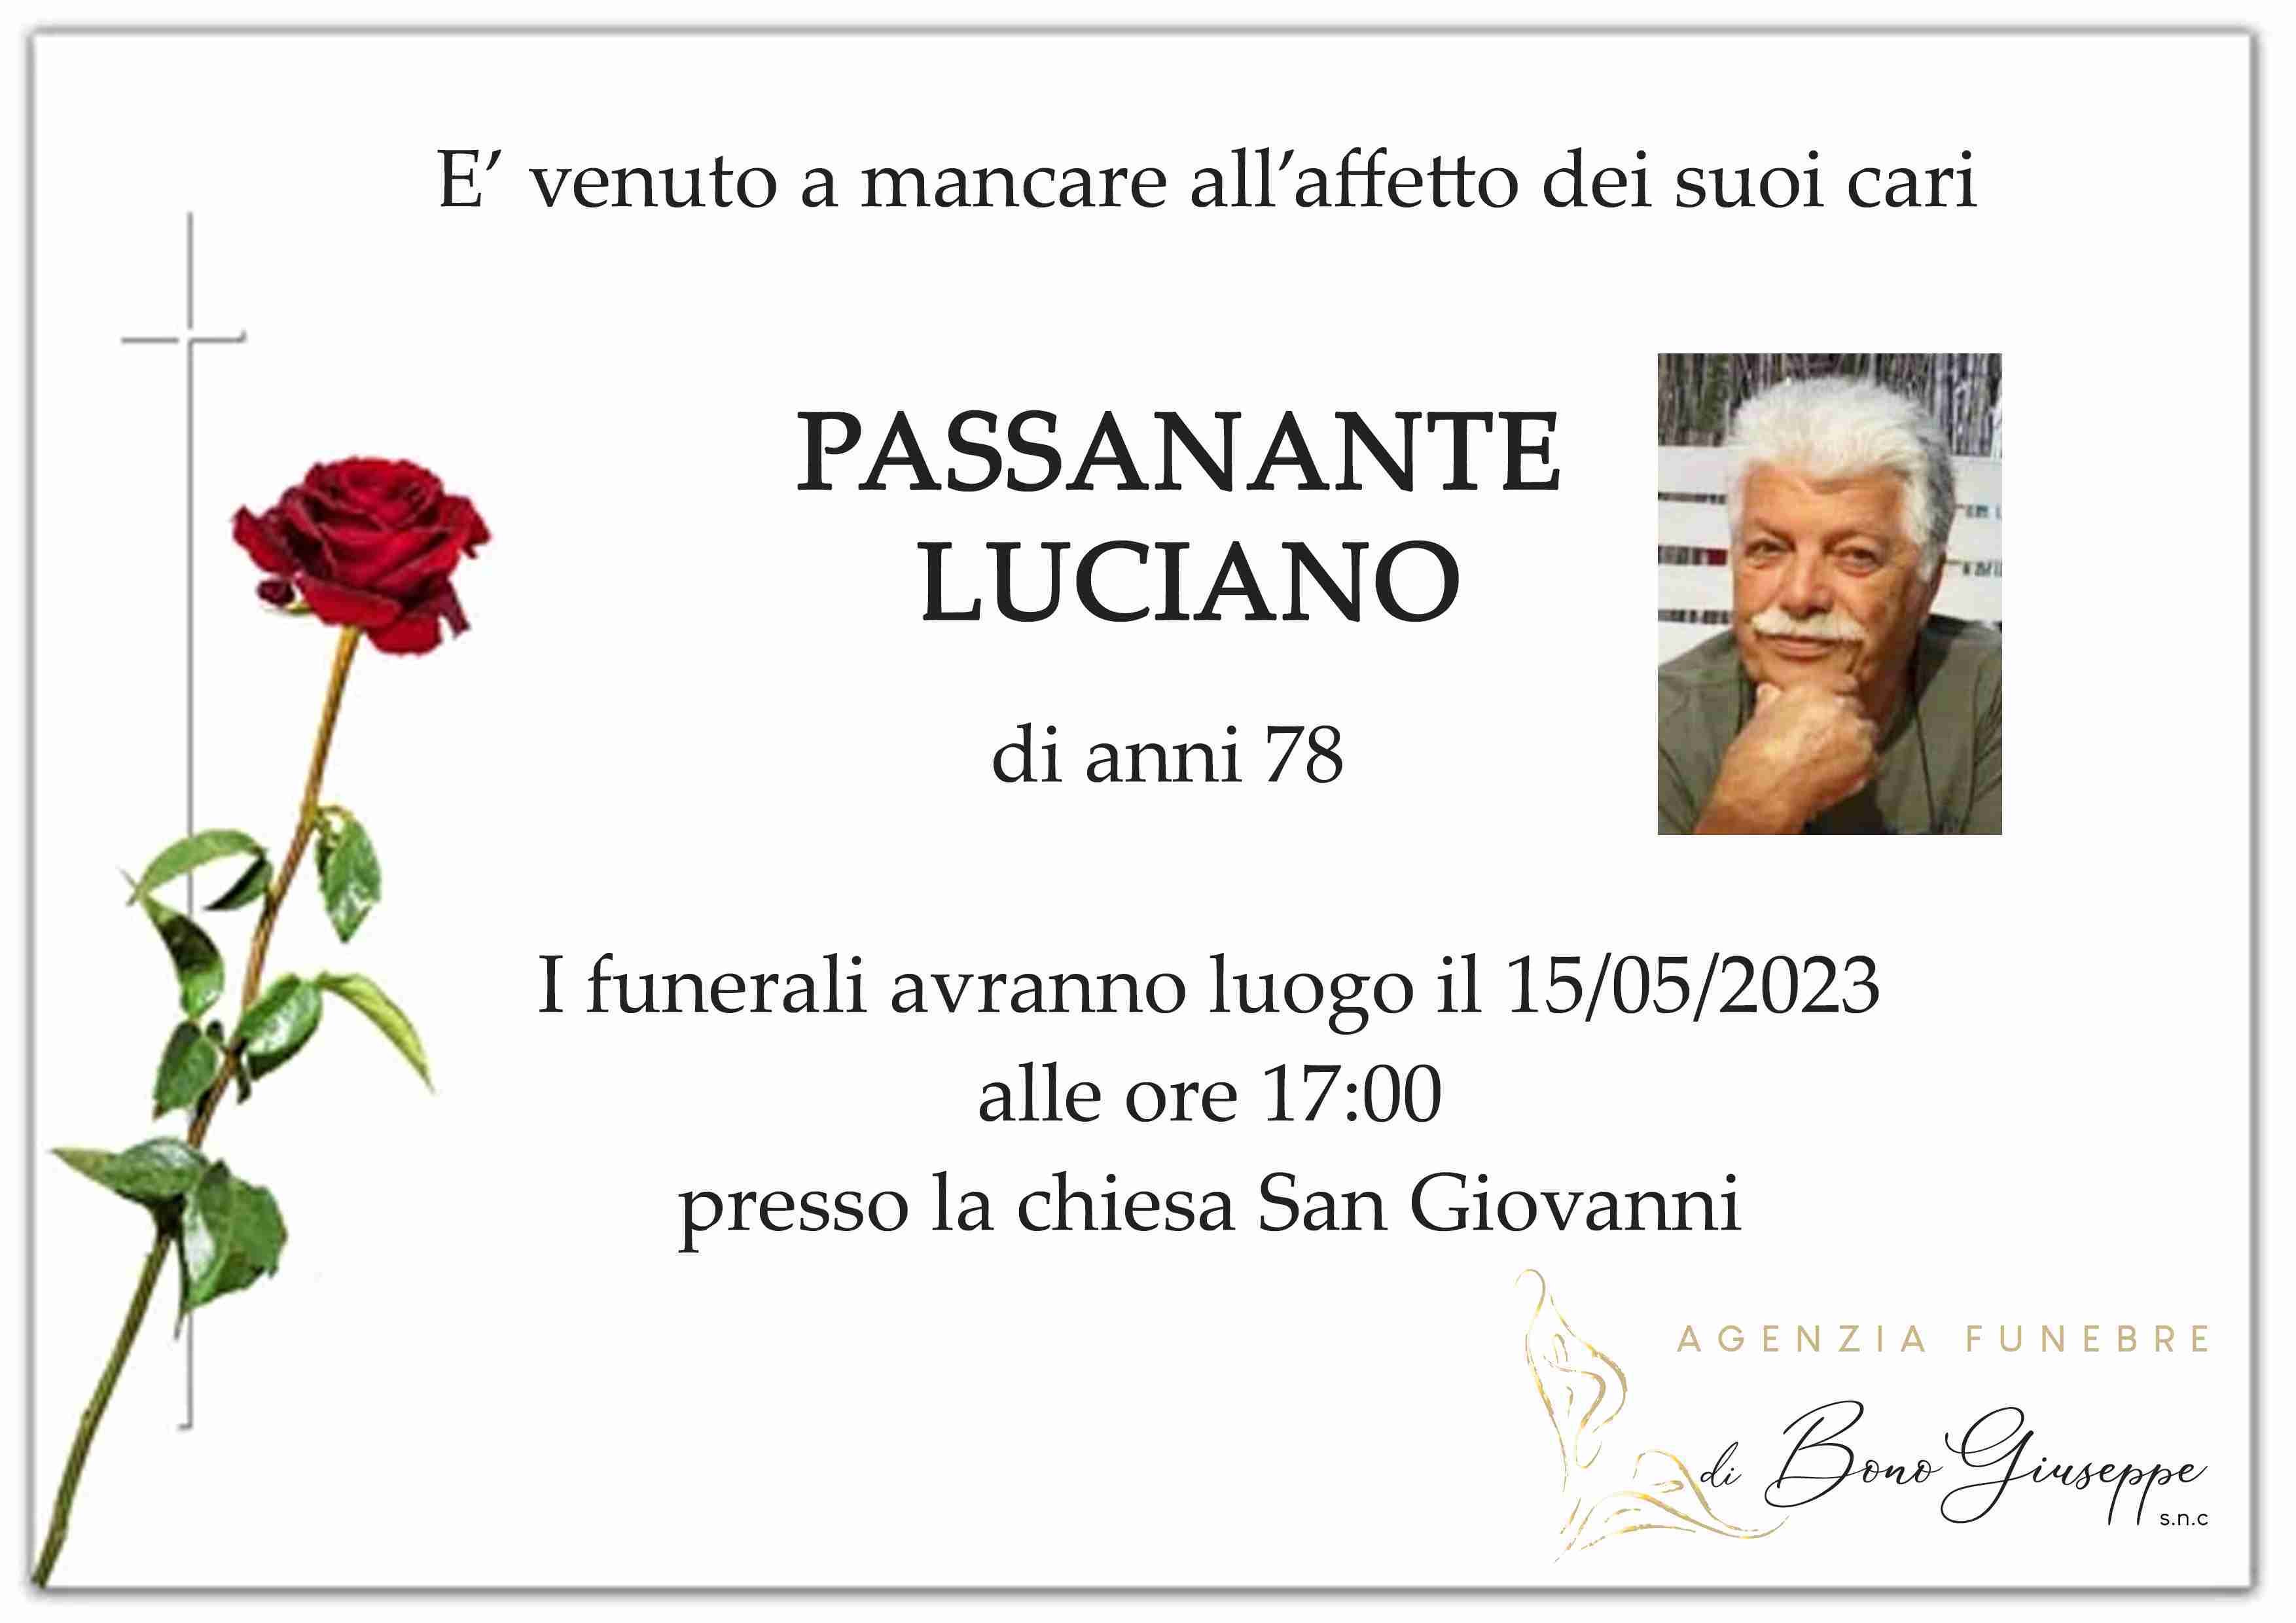 Luciano Passanante